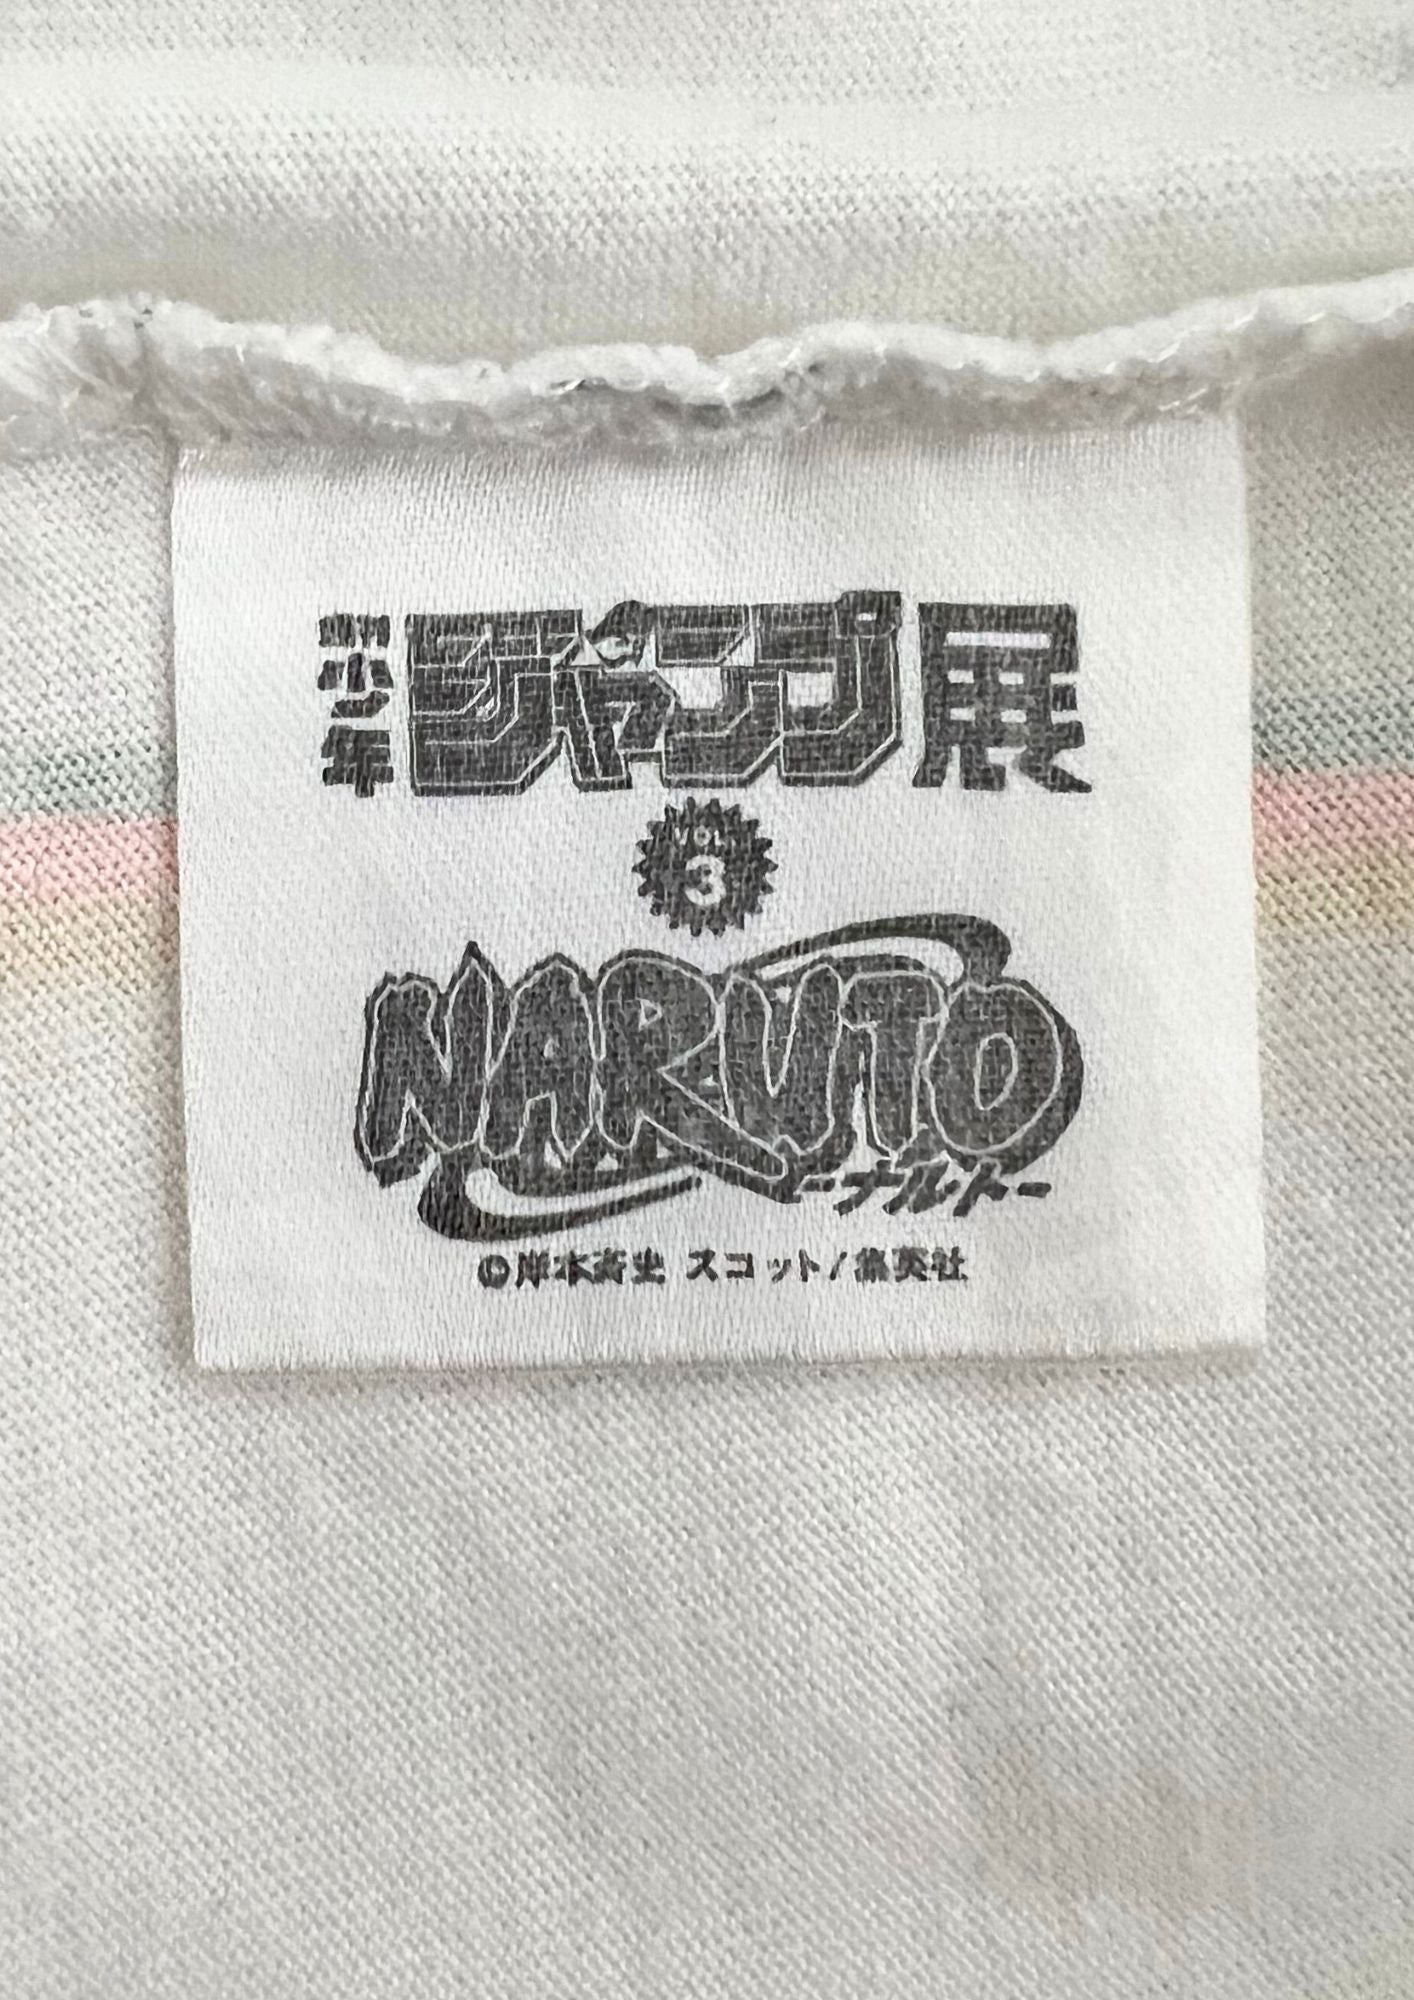 Naruto x Shonen Jump Vol. 3 Naruto Exhibition Limited T-shirt